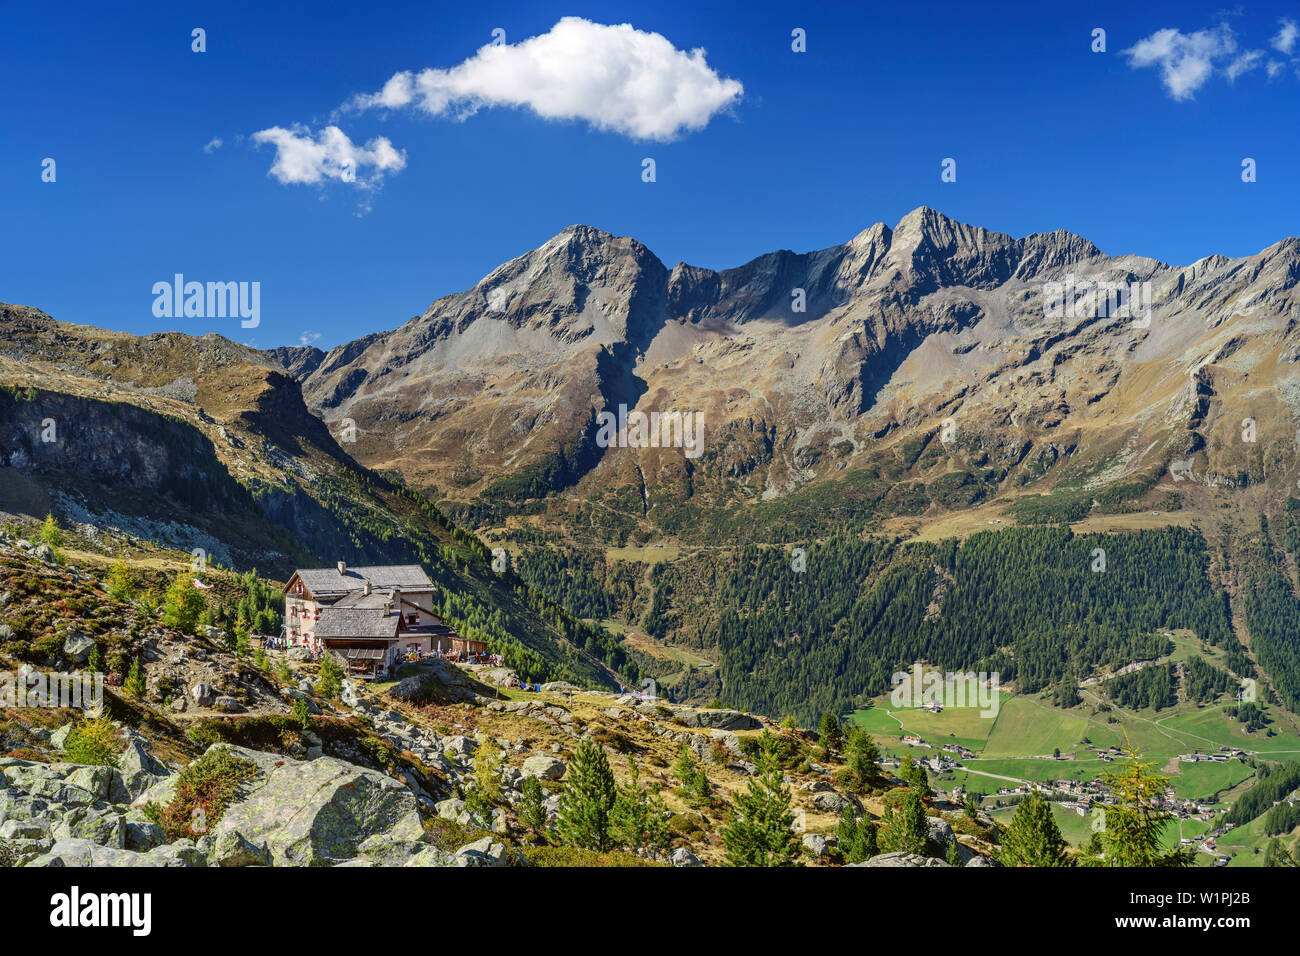 Cabaña Kasseler Huette con burdos Durreck Moosstock y en segundo plano, hut Kasseler Huette, valle de Rieserferner Reinbachtal, grupo, Tirol del Sur, Ita Foto de stock